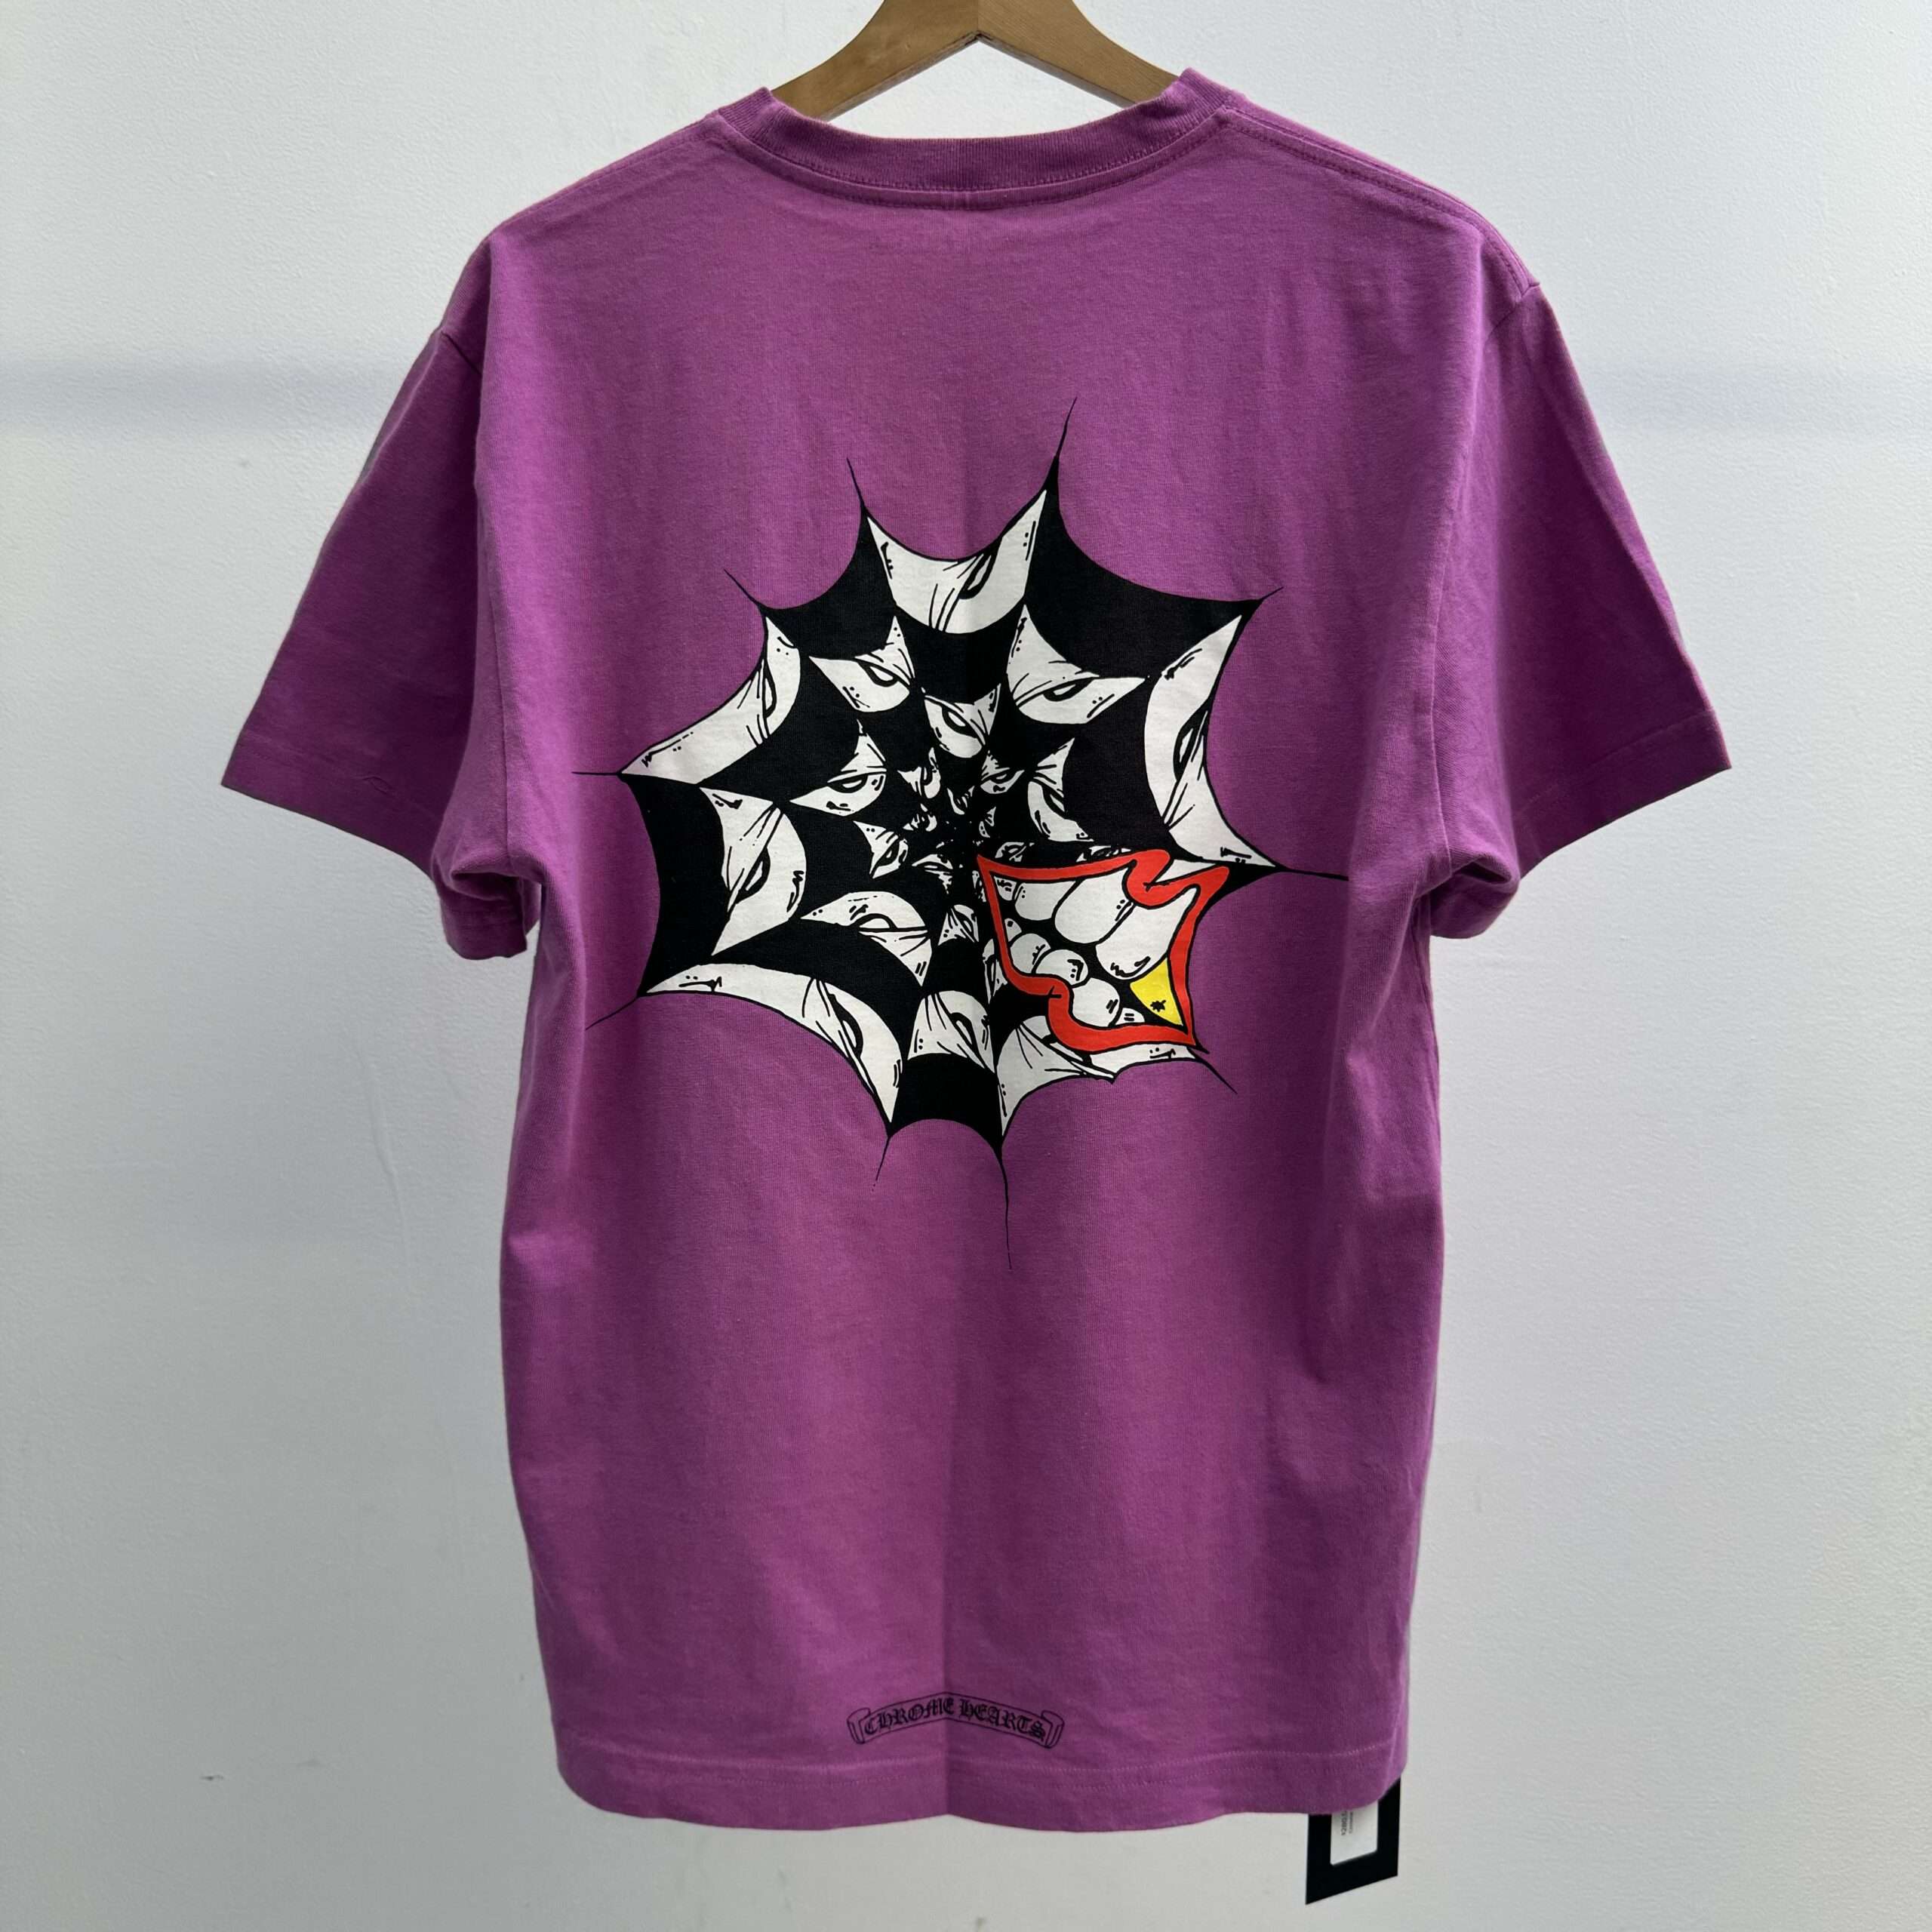 Chrome Hearts Matty Boy Spider T-Shirt - Veblen